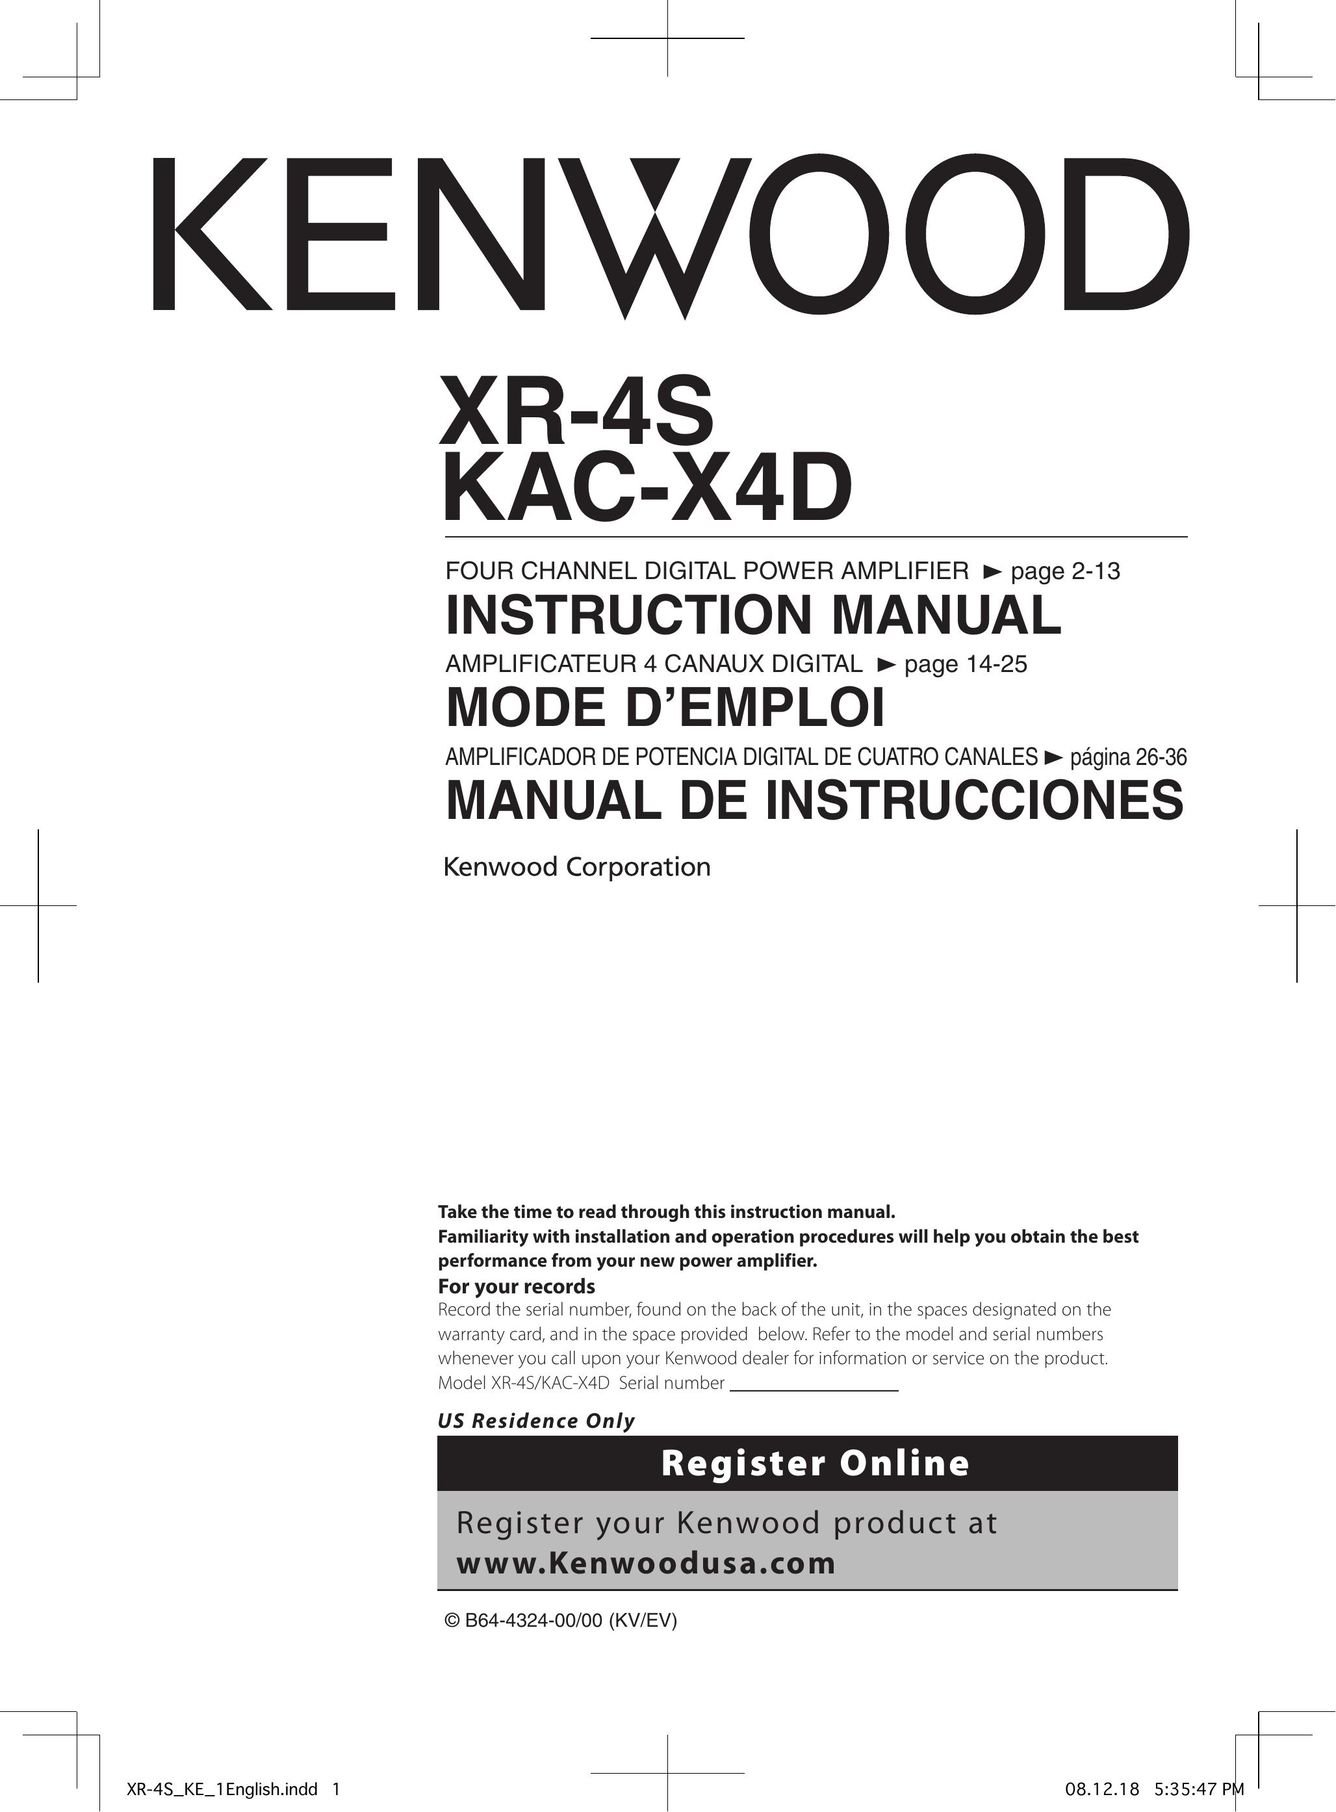 Kenwood KAC-X4D Car Amplifier User Manual